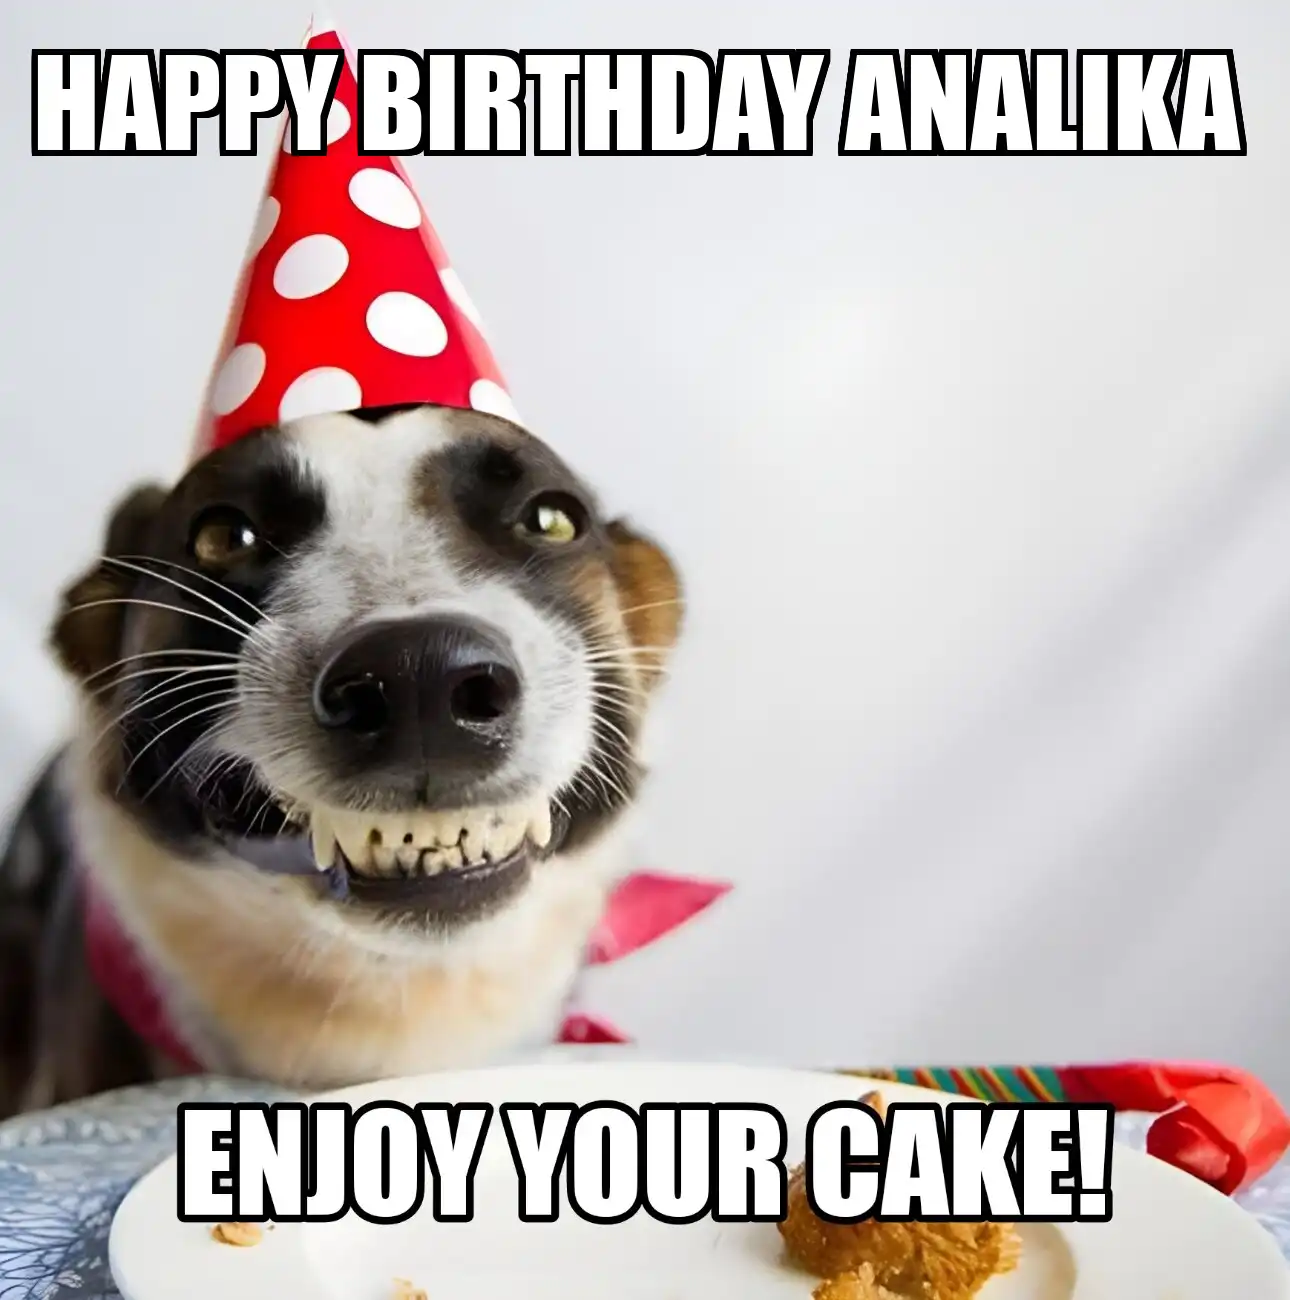 Happy Birthday Analika Enjoy Your Cake Dog Meme